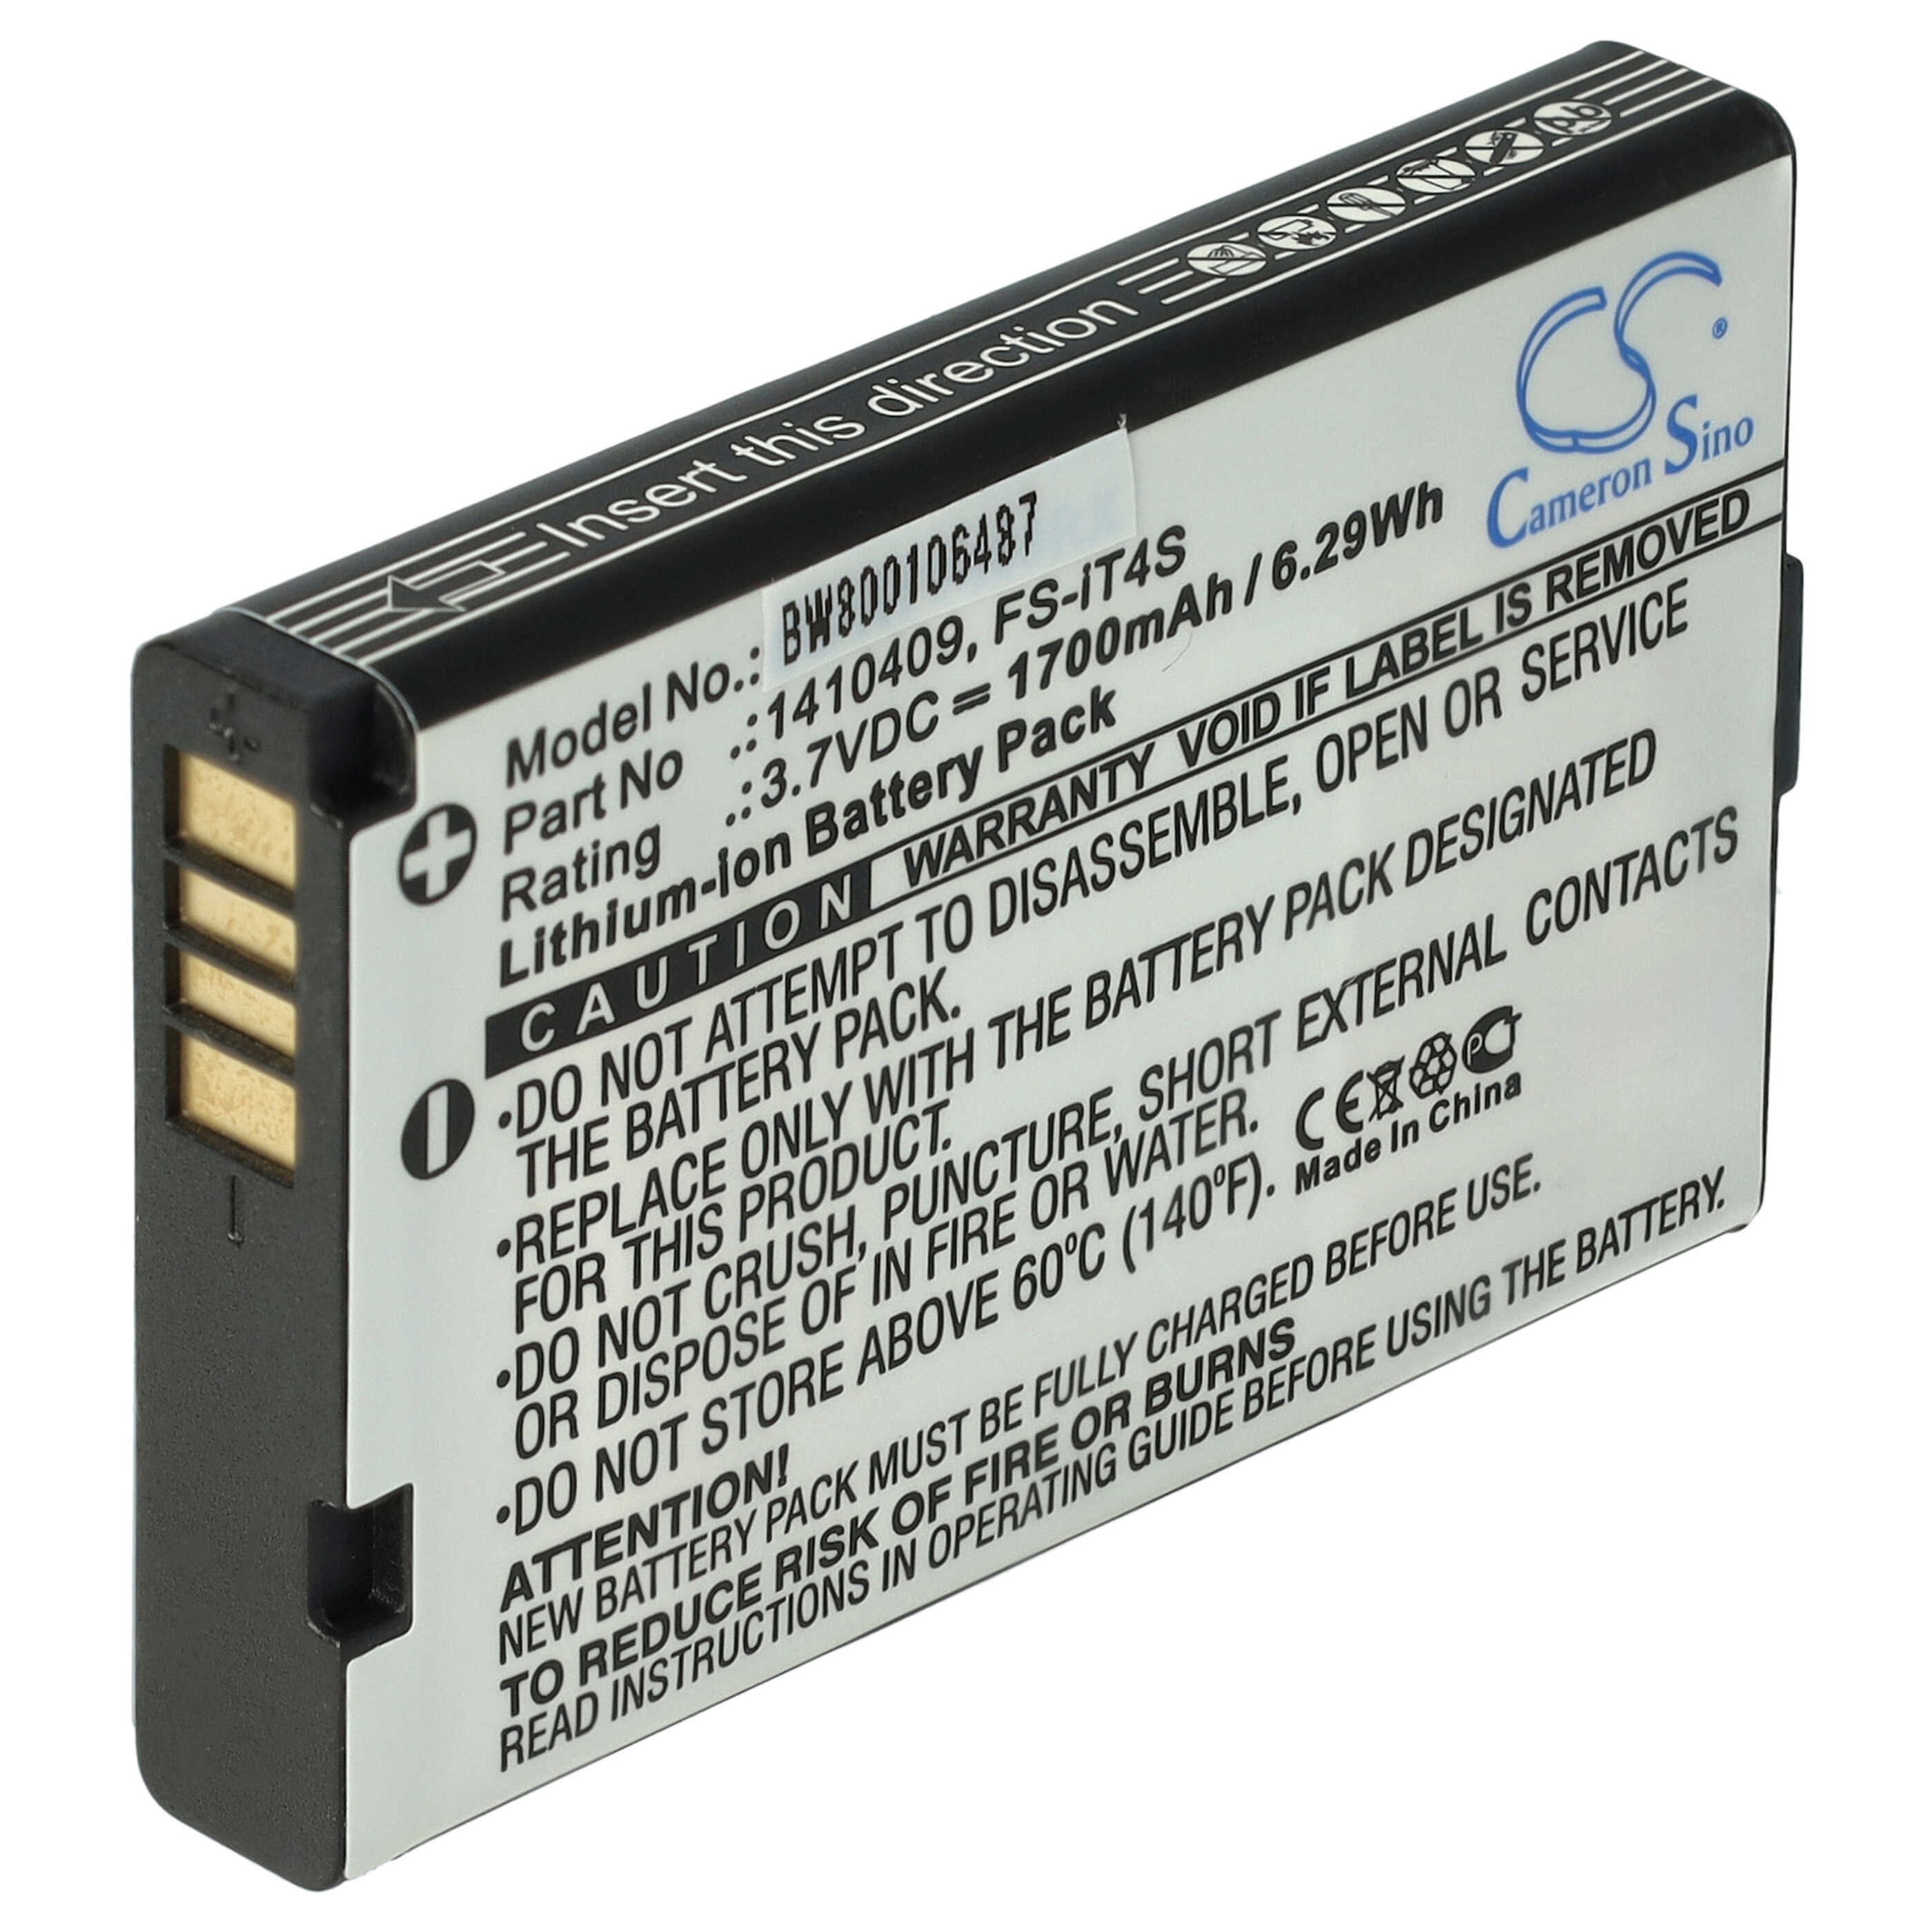 Akumulator do pada Reely zamiennik Reely 1410409, FS-iT4S - 1700 mAh, 3,7 V